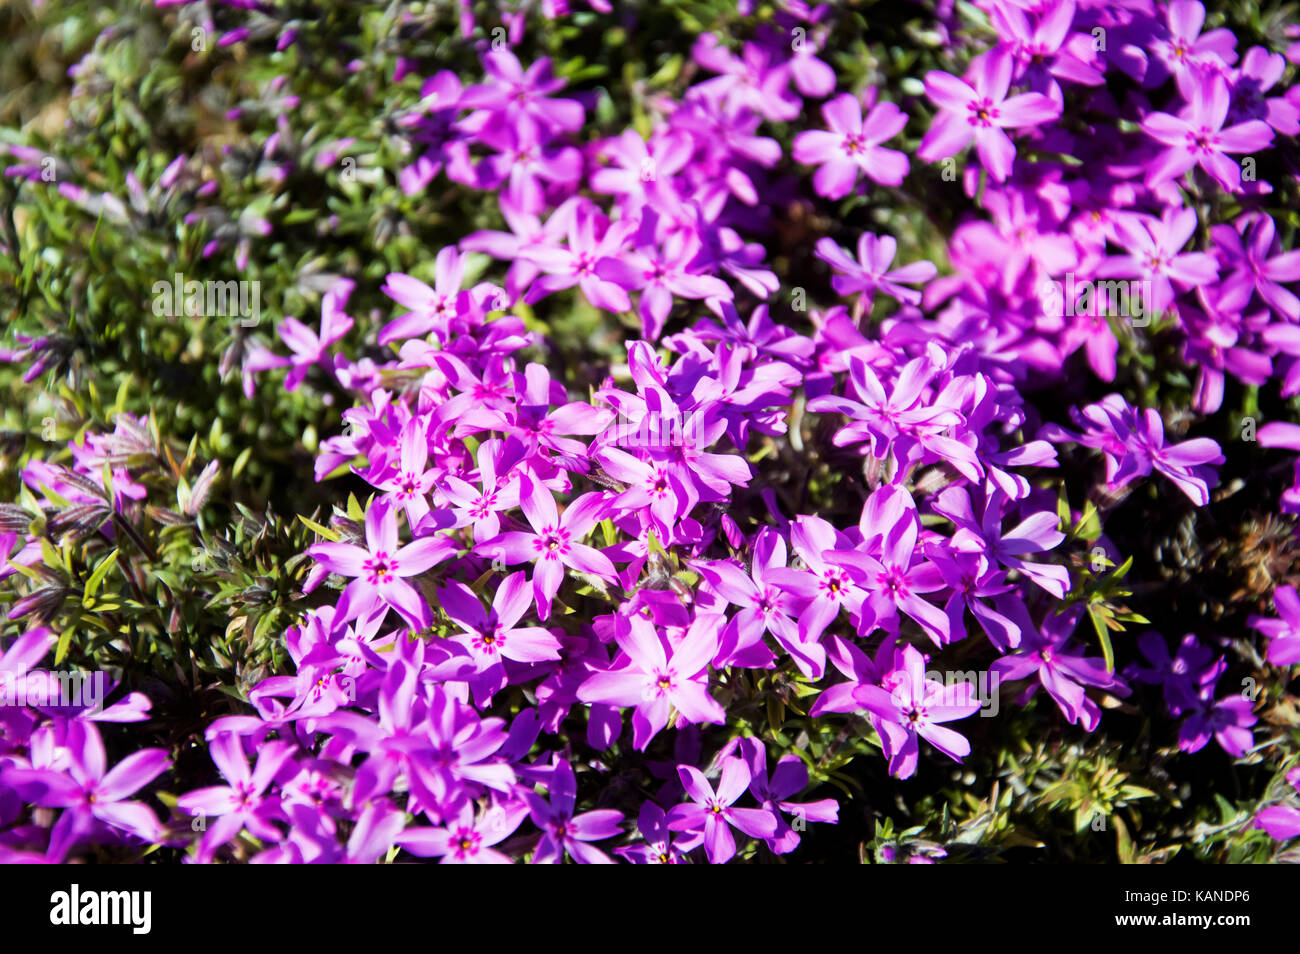 A spread of purple phlox flowers. Stock Photo